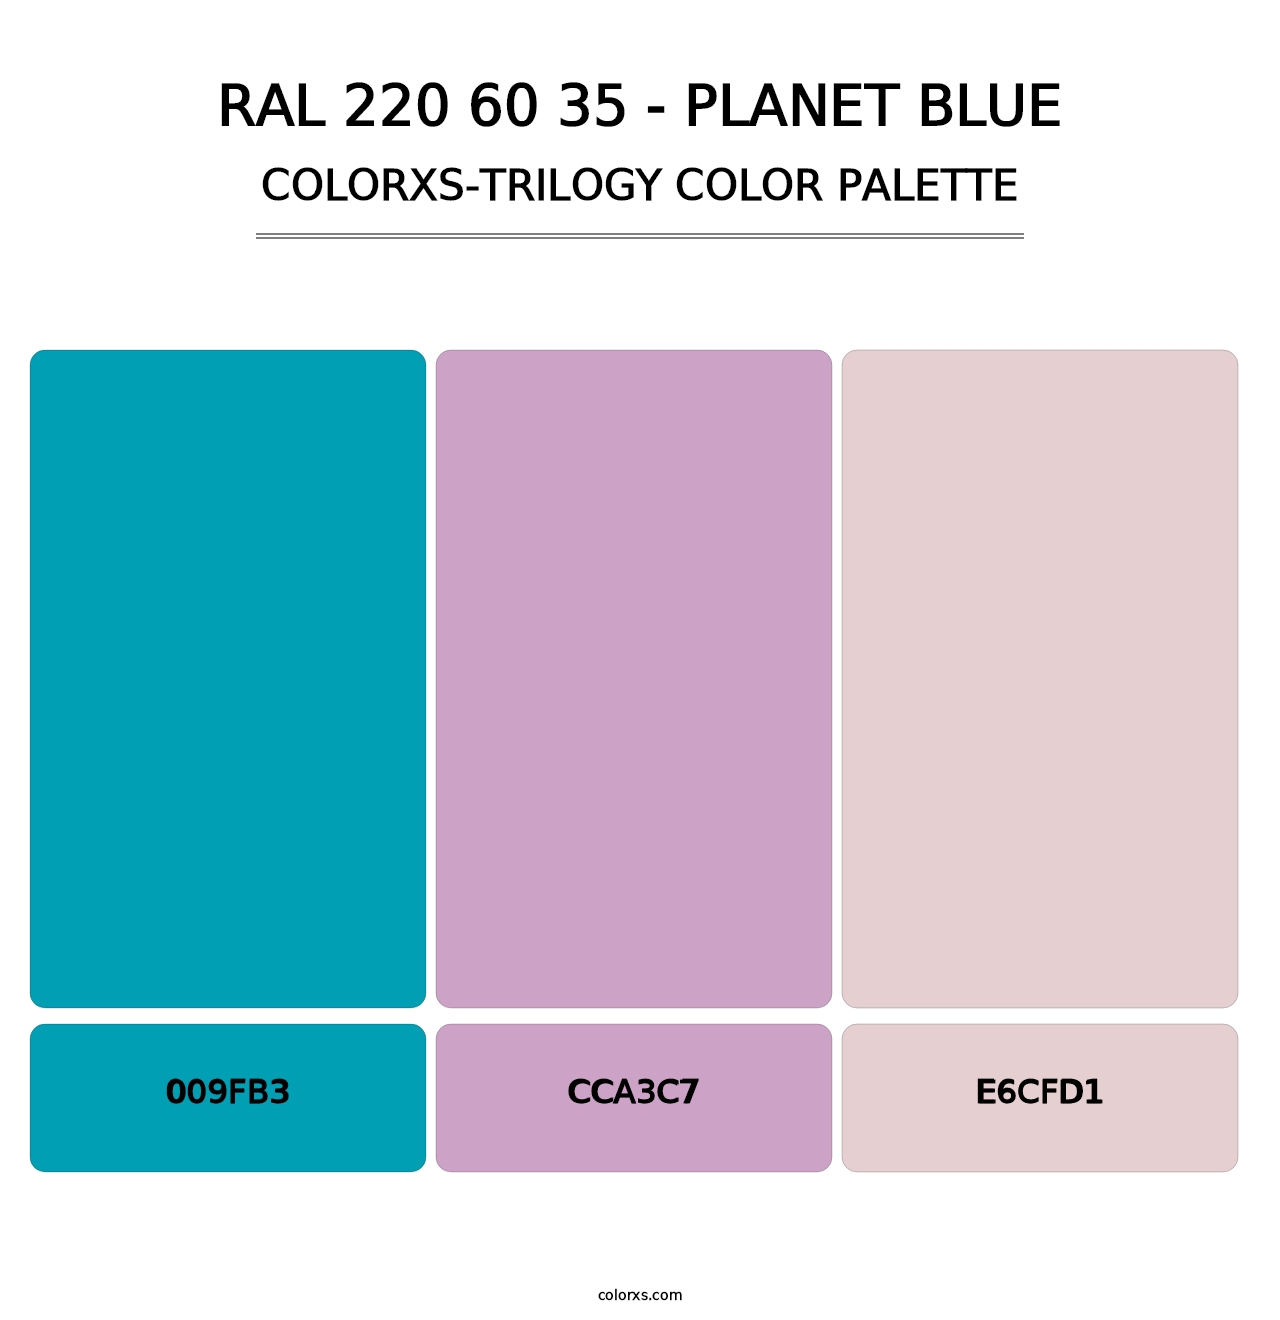 RAL 220 60 35 - Planet Blue - Colorxs Trilogy Palette